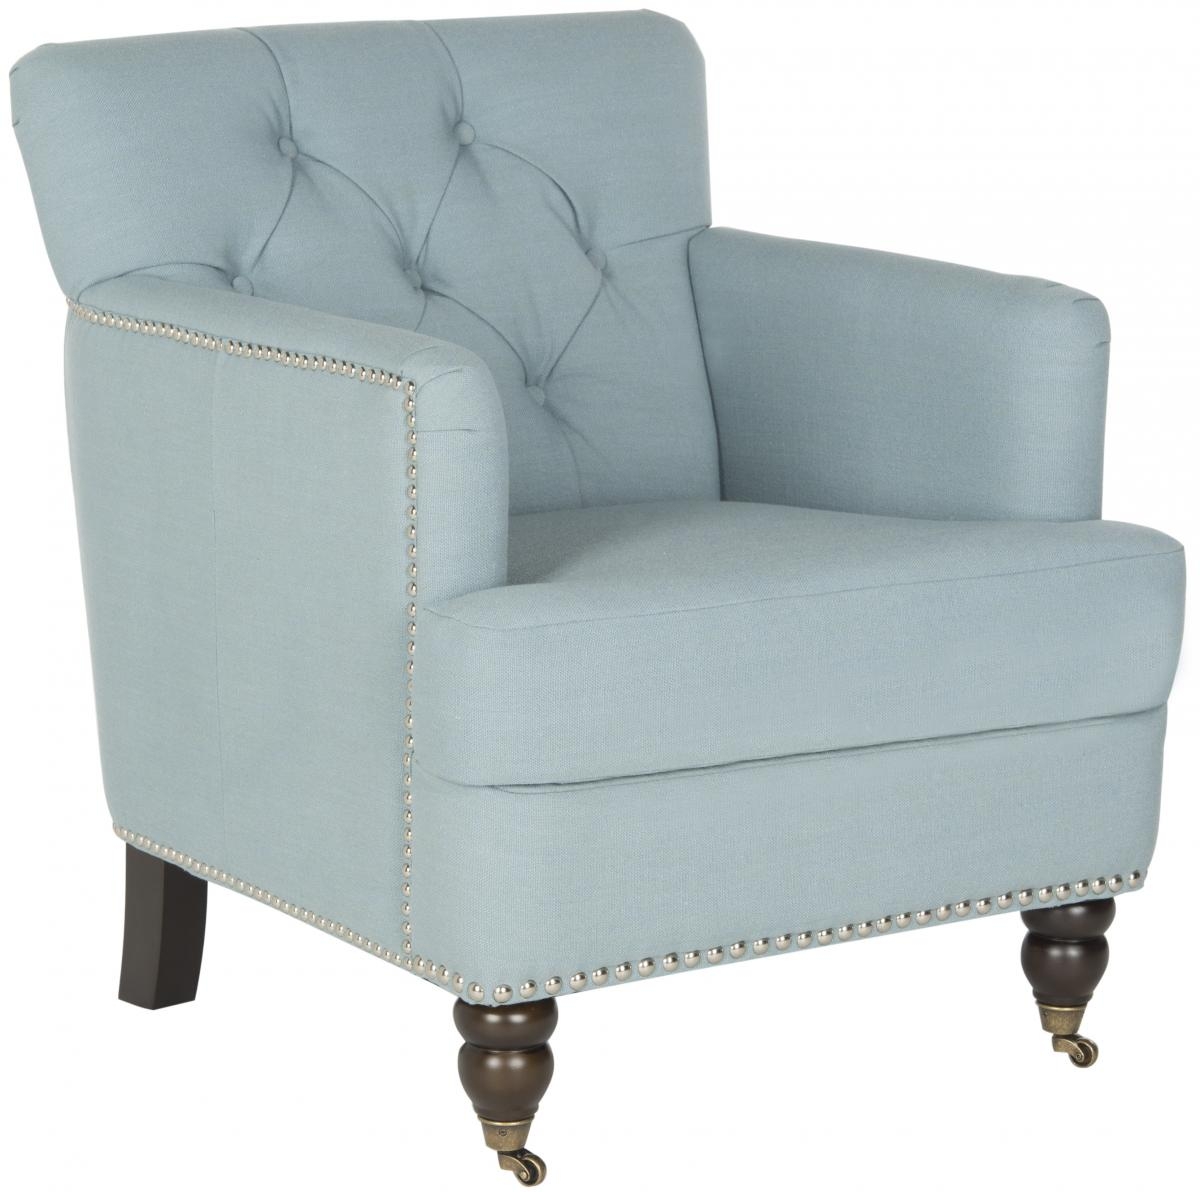 Colin Tufted Club Chair - Sky Blue/Espresso - Arlo Home - Image 1